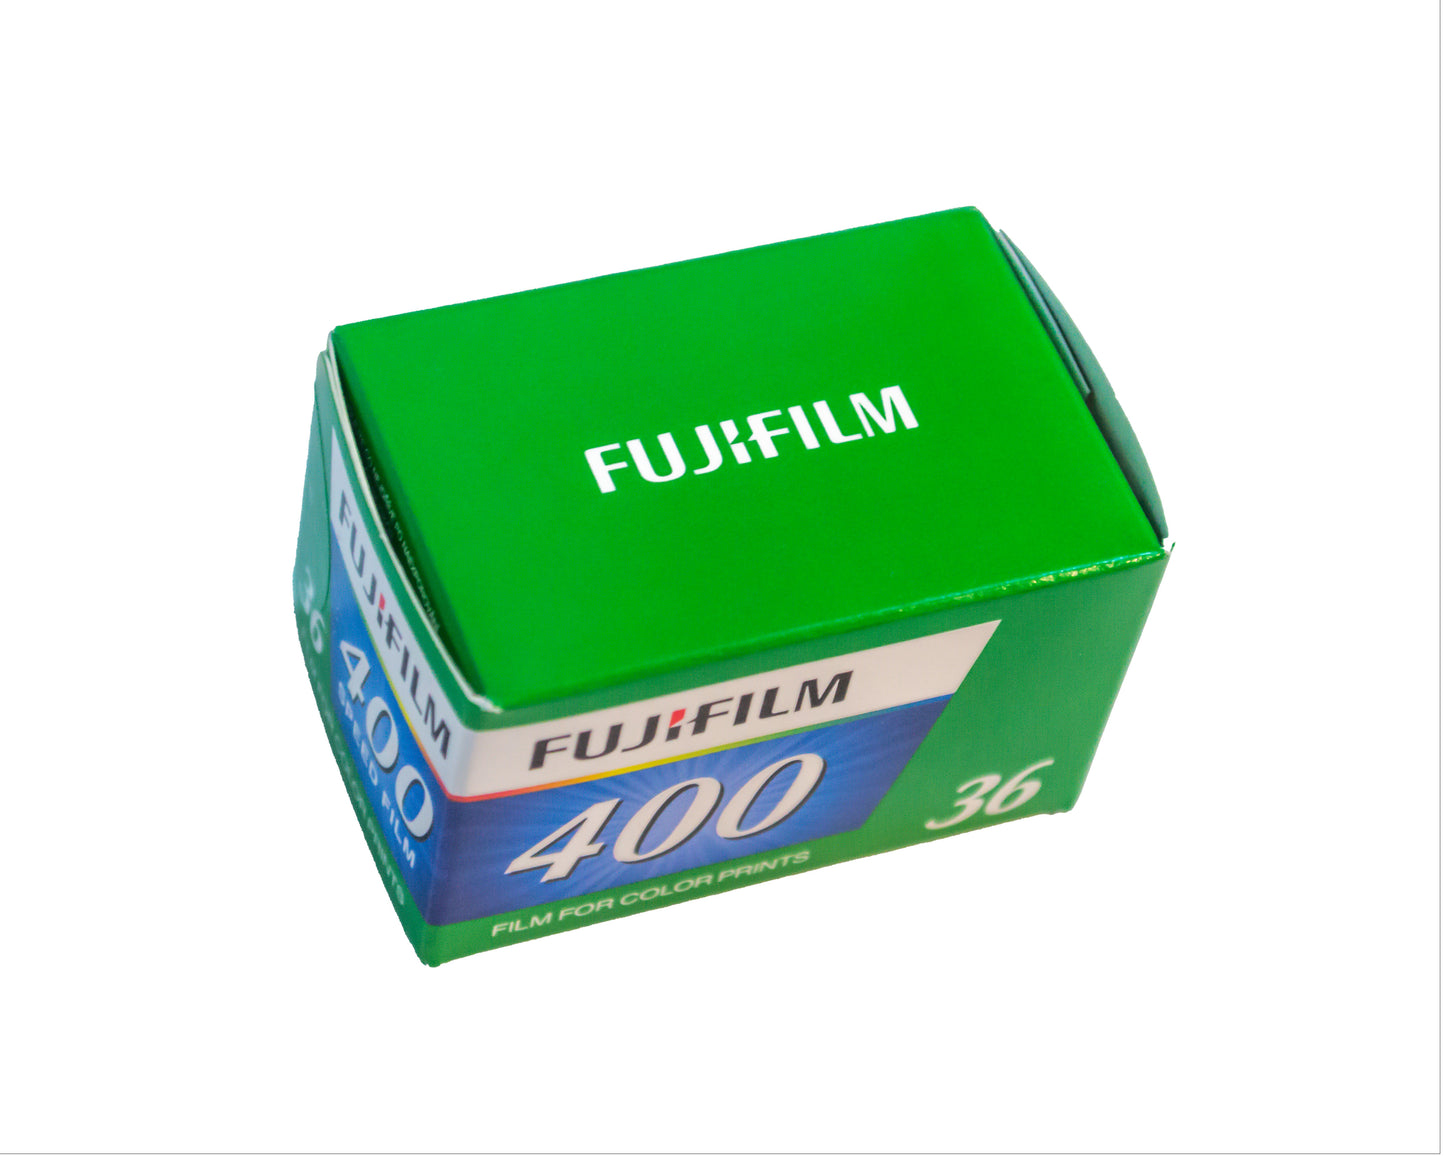 Película fotográfica Fujifilm 400 35 mm 36 exp